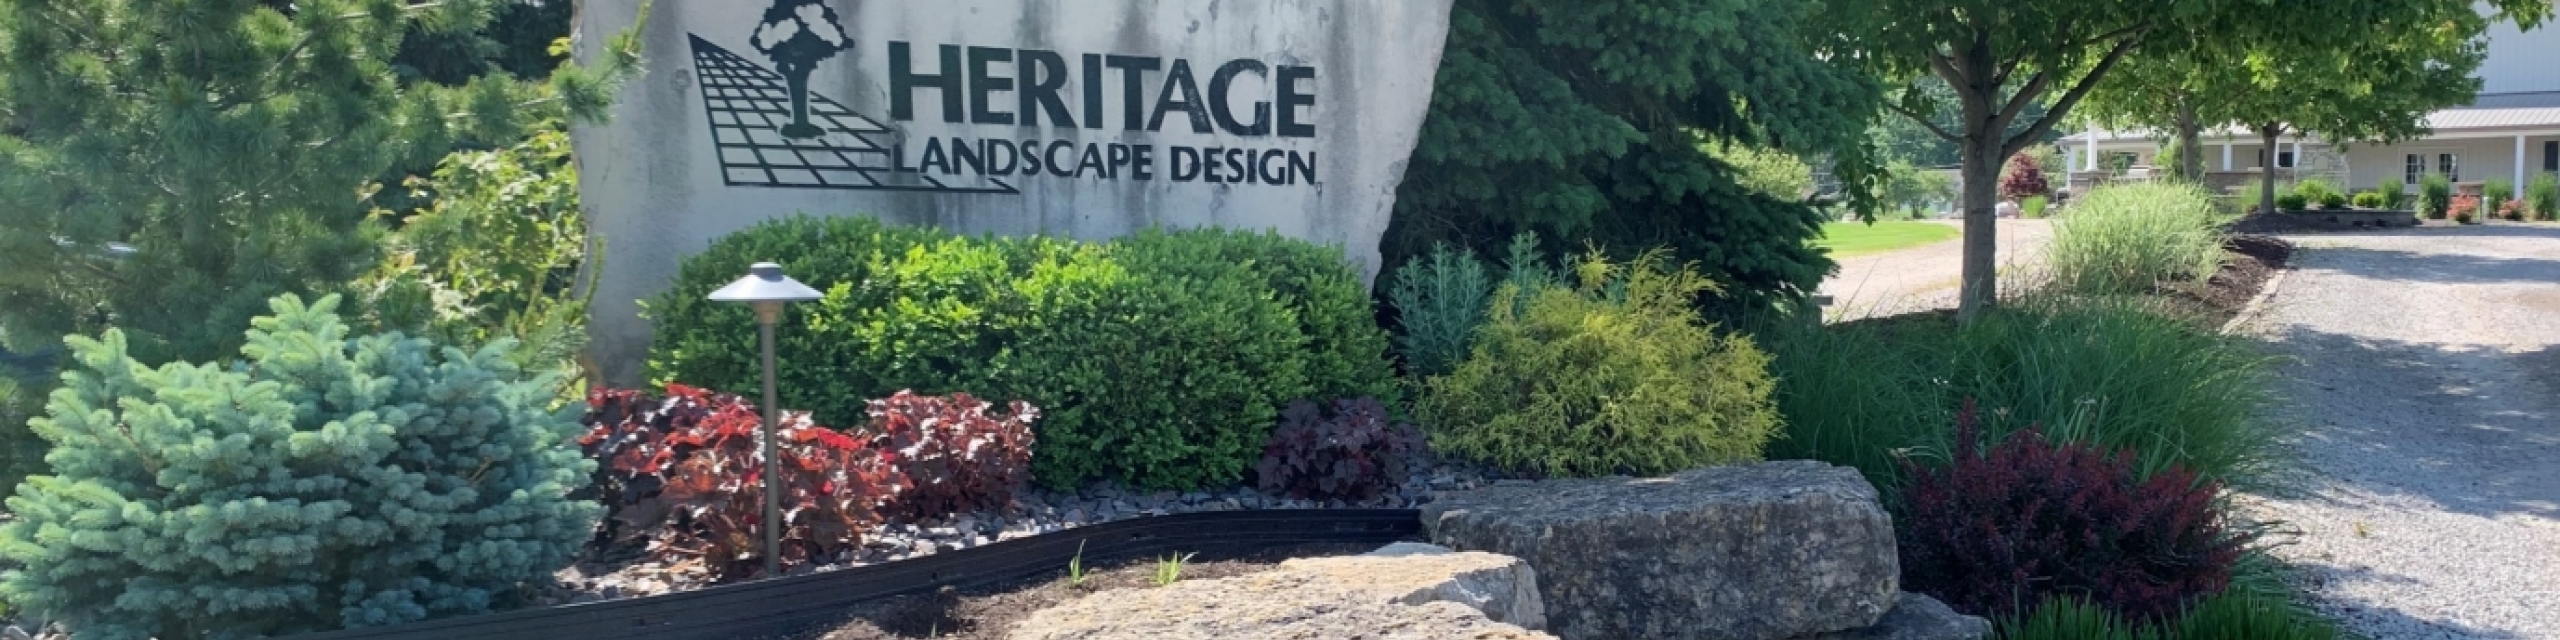 The Heritage Landscape Design sign at the nursery